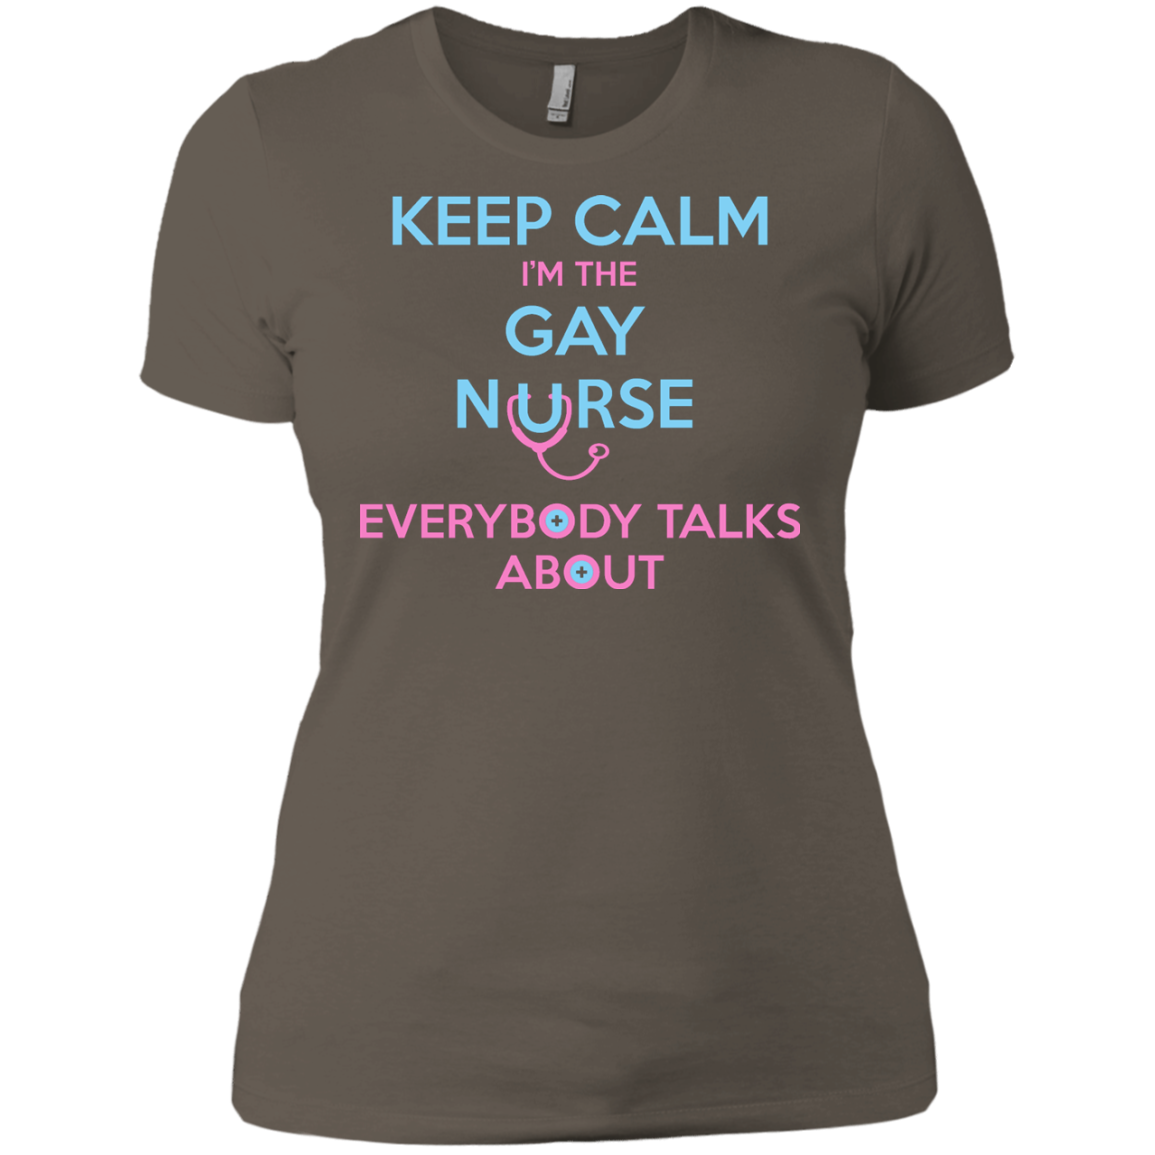 Keep Calm I'm The Gay Nurse round neck tshirt for women